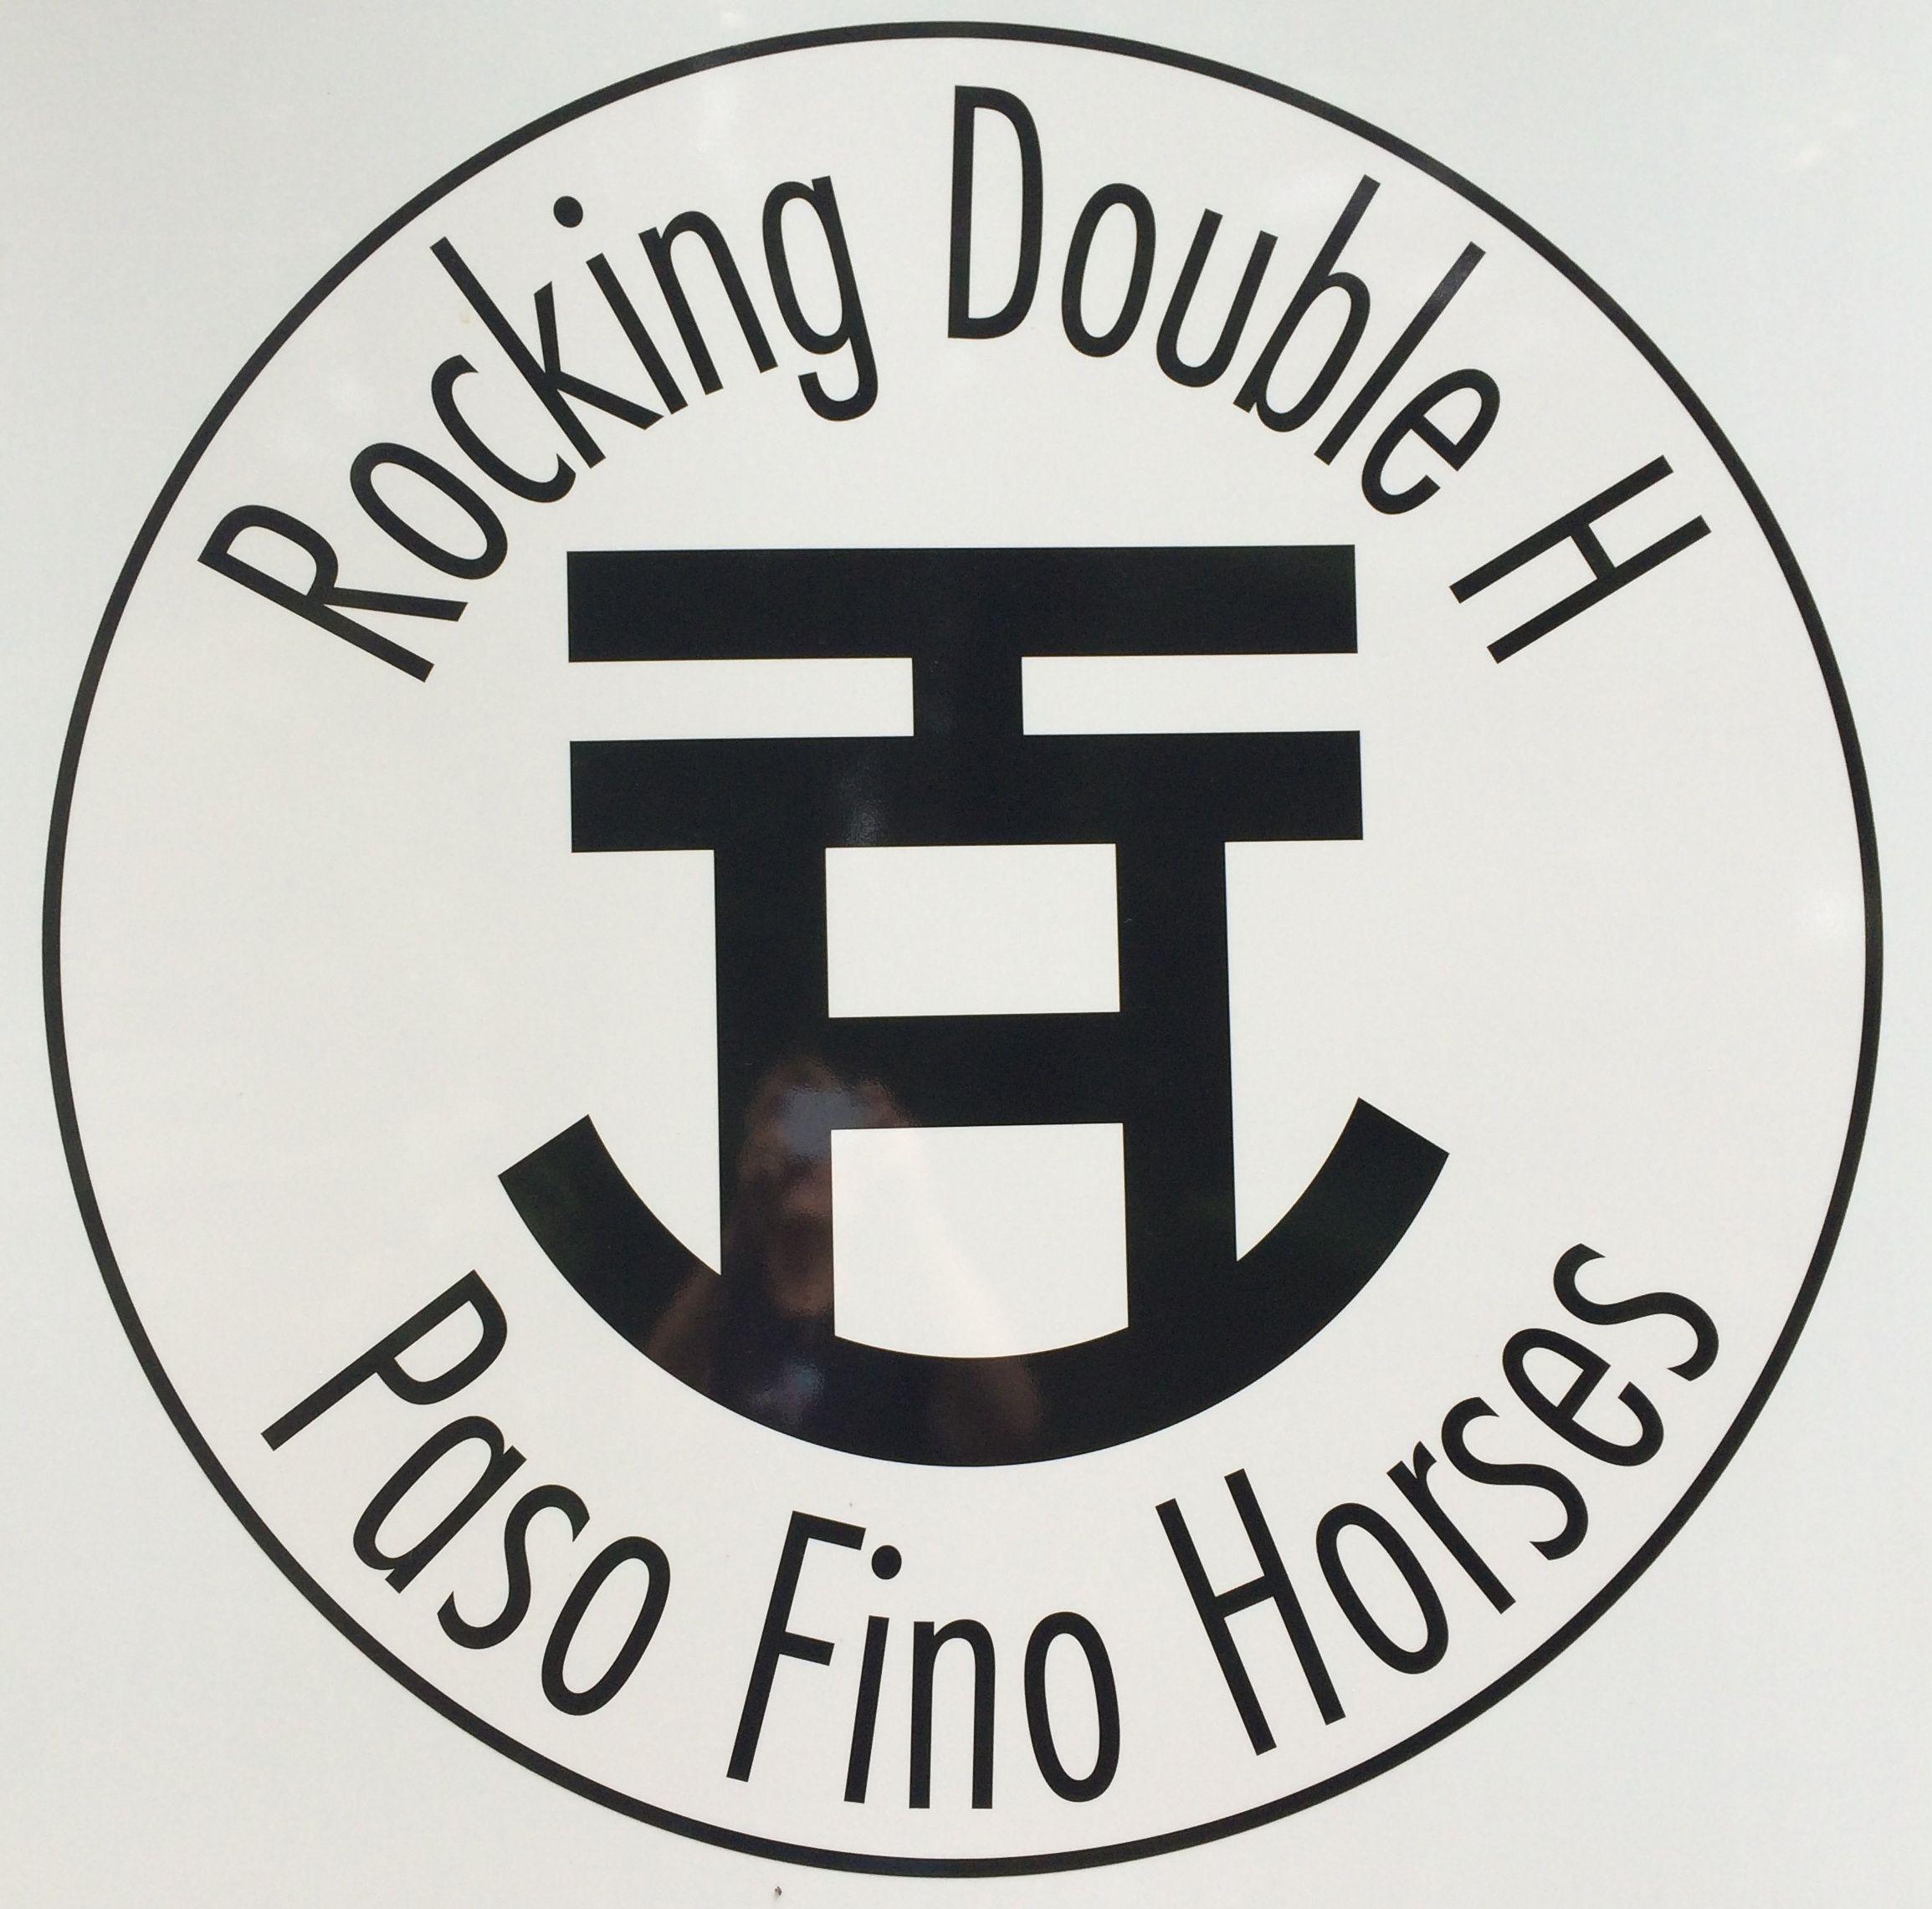 Double H Logo - Rocking Double H Paso Fino Horses | Northwest Paso Fino Horse ...